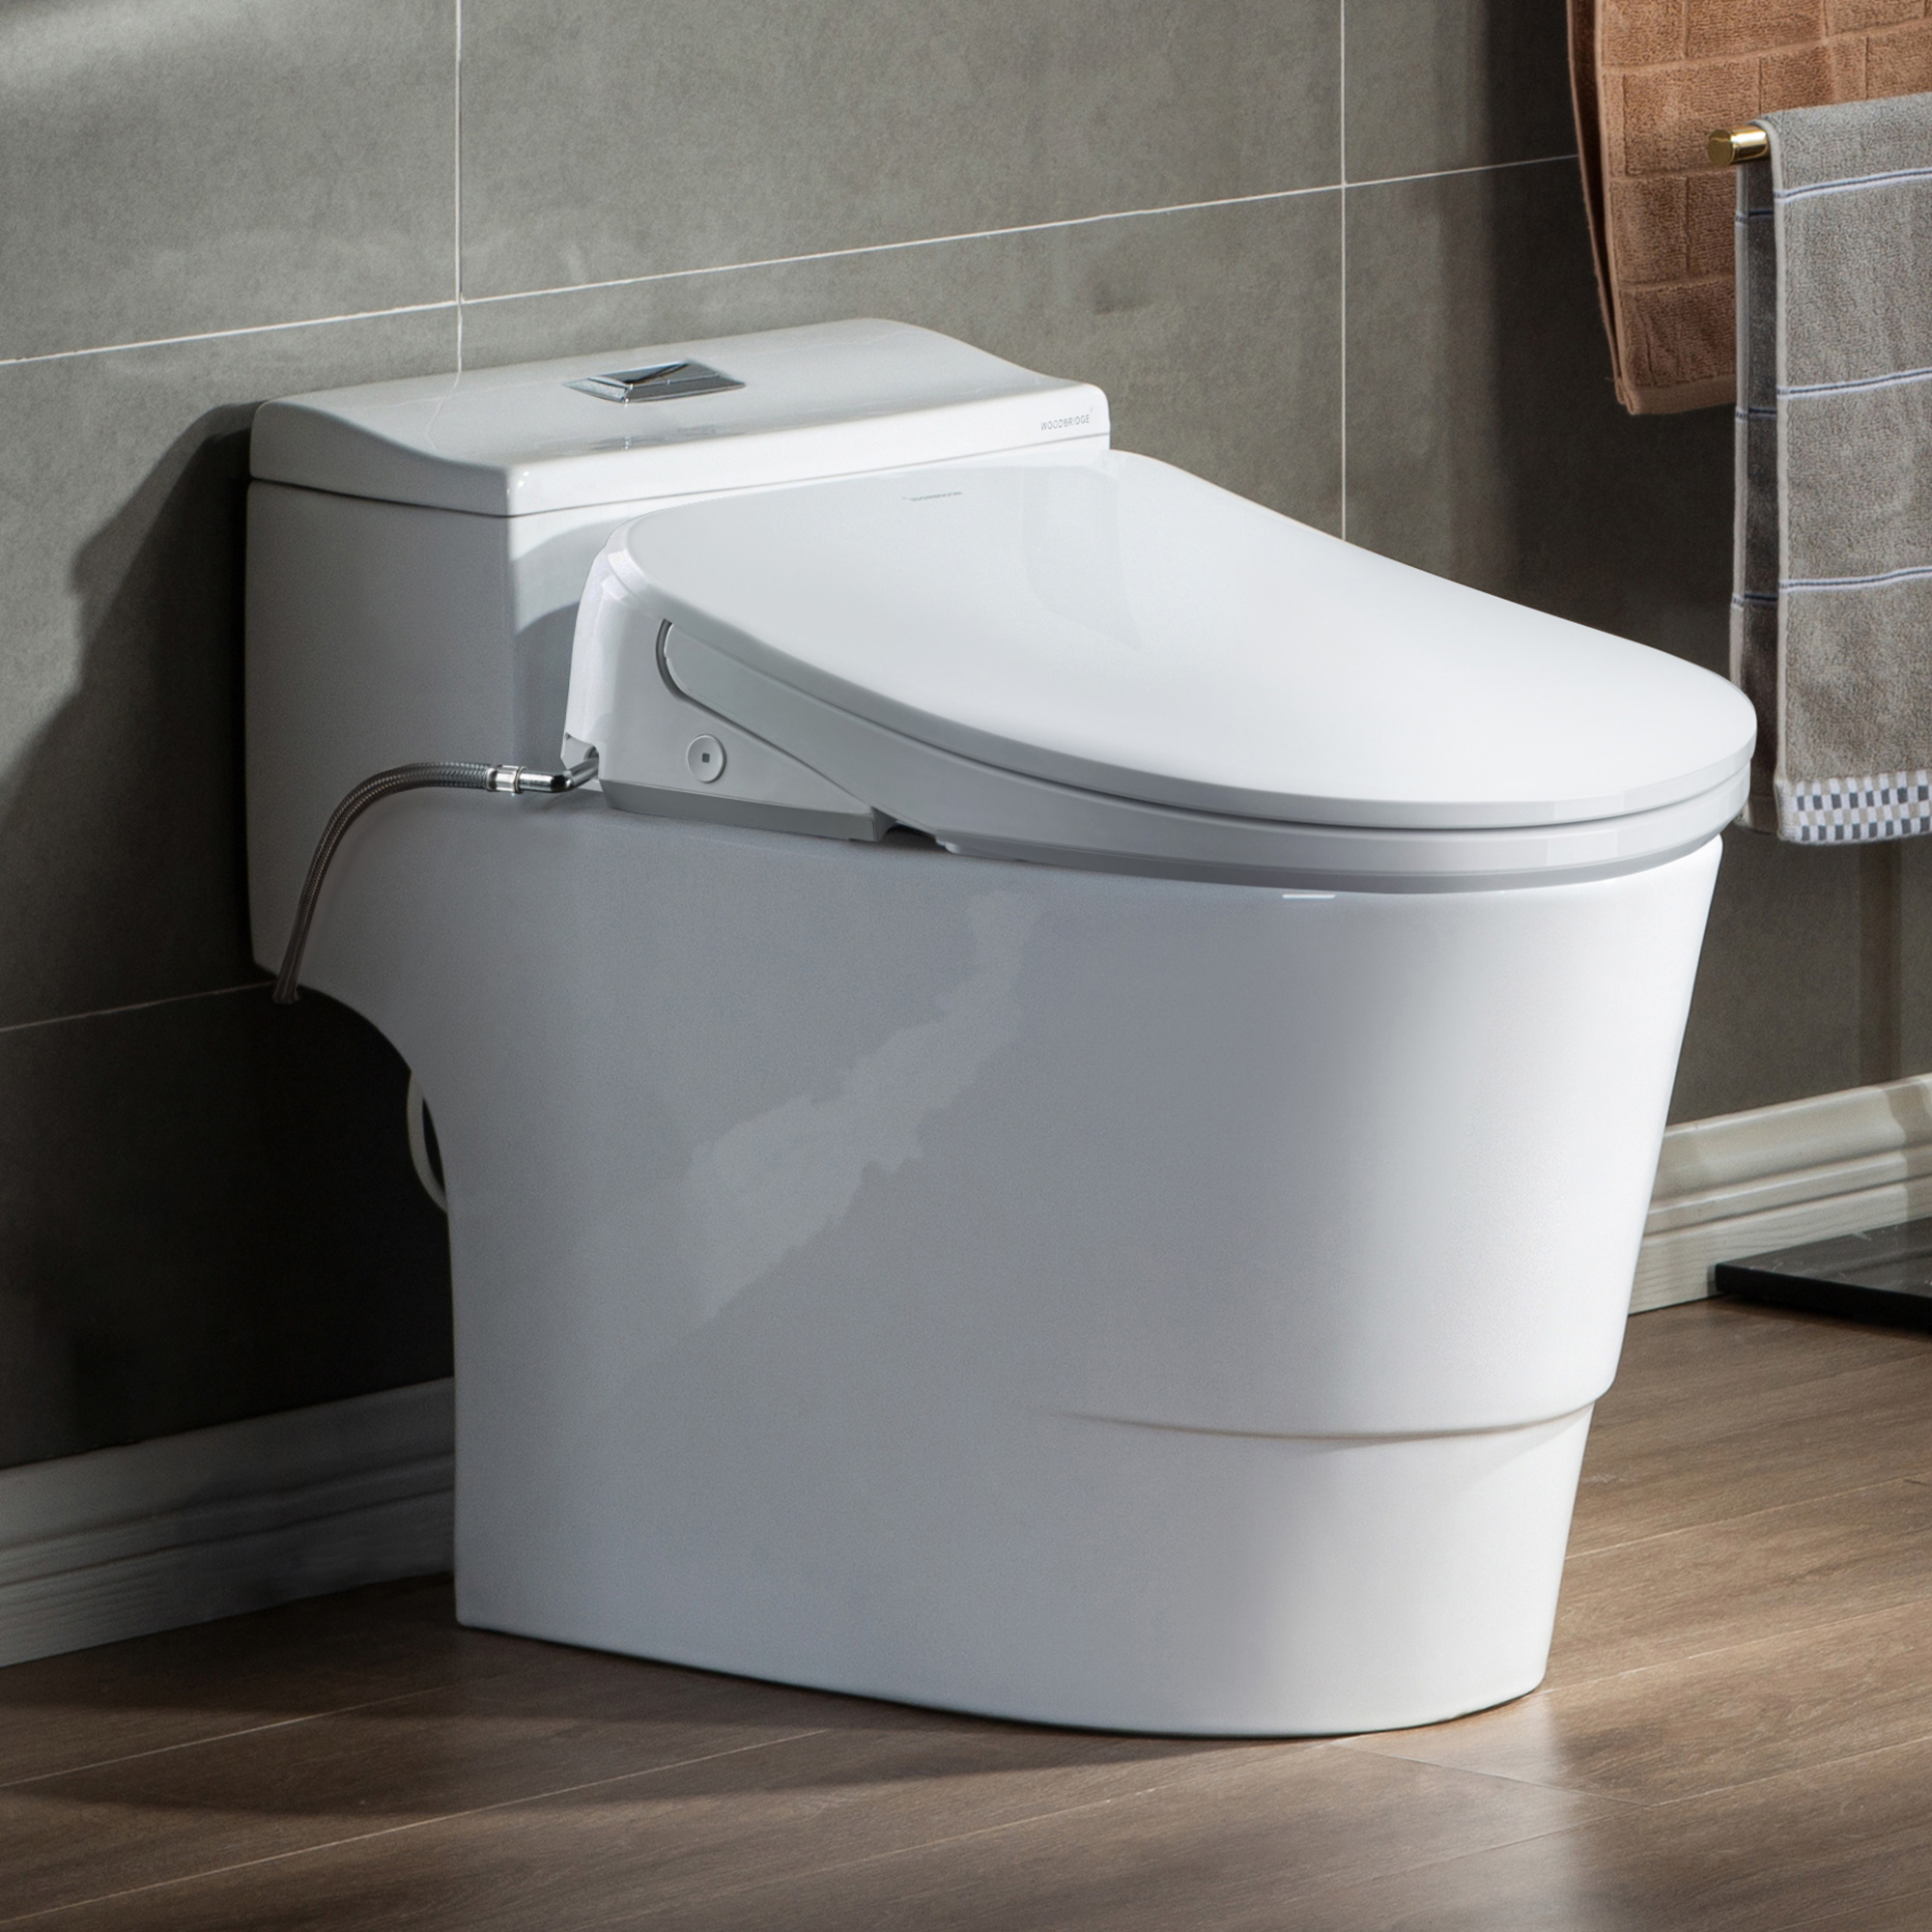  WOODBRIDGE Elongated 1-Piece Toilet with Advanced Auto Open & Close Bidet Smart Toilet Seat, Child Wash, 1000 Gram MaP Flushing Score, 1.28 GPF Dual, Water Sensed_15250